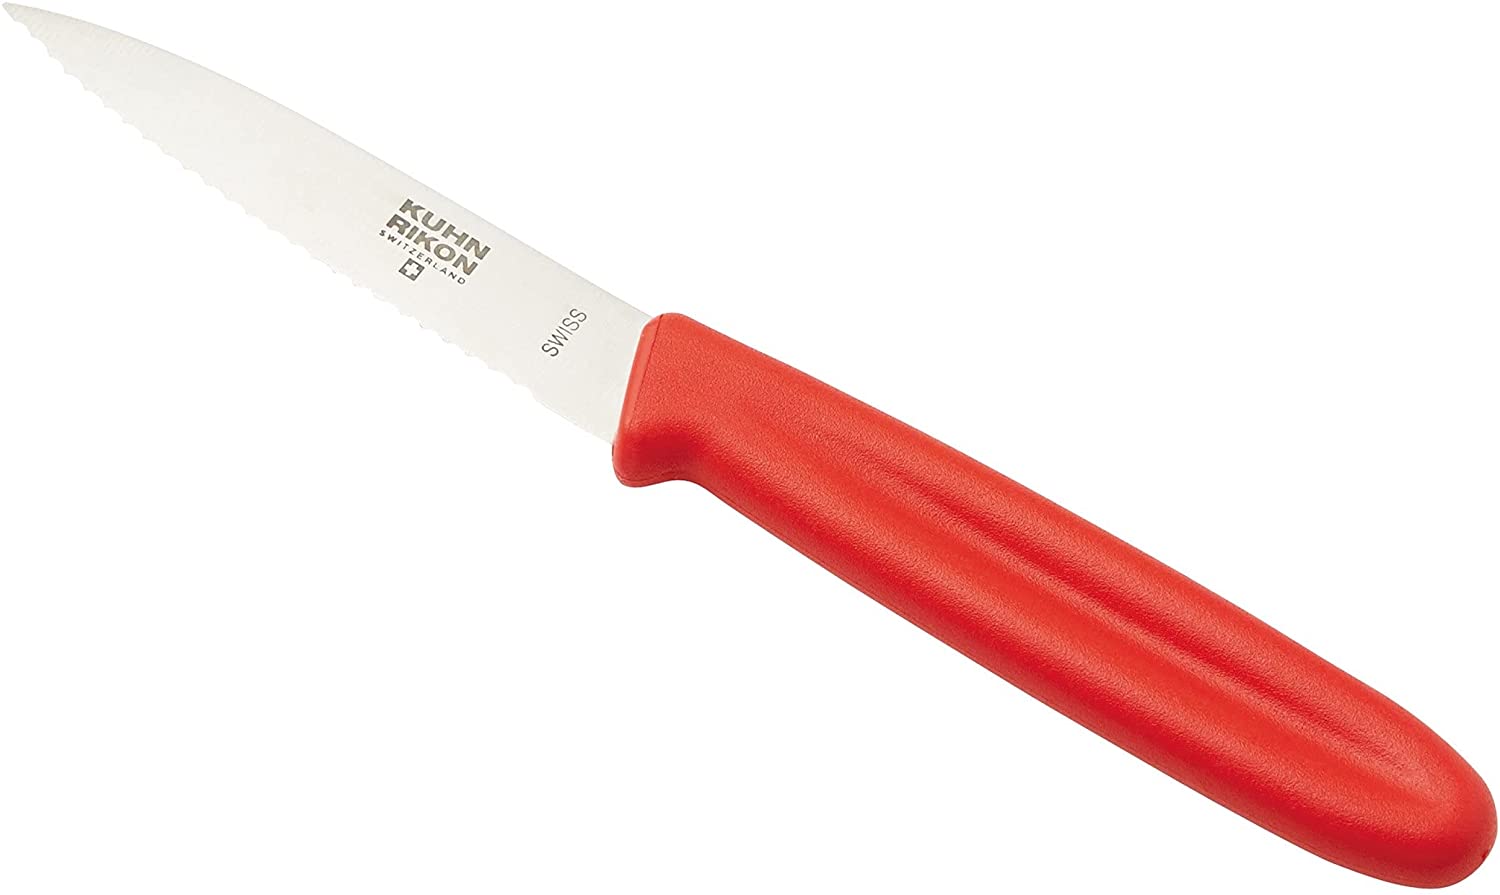 KUHN RIKON 22207 Swiss Knife Paring Knife Red